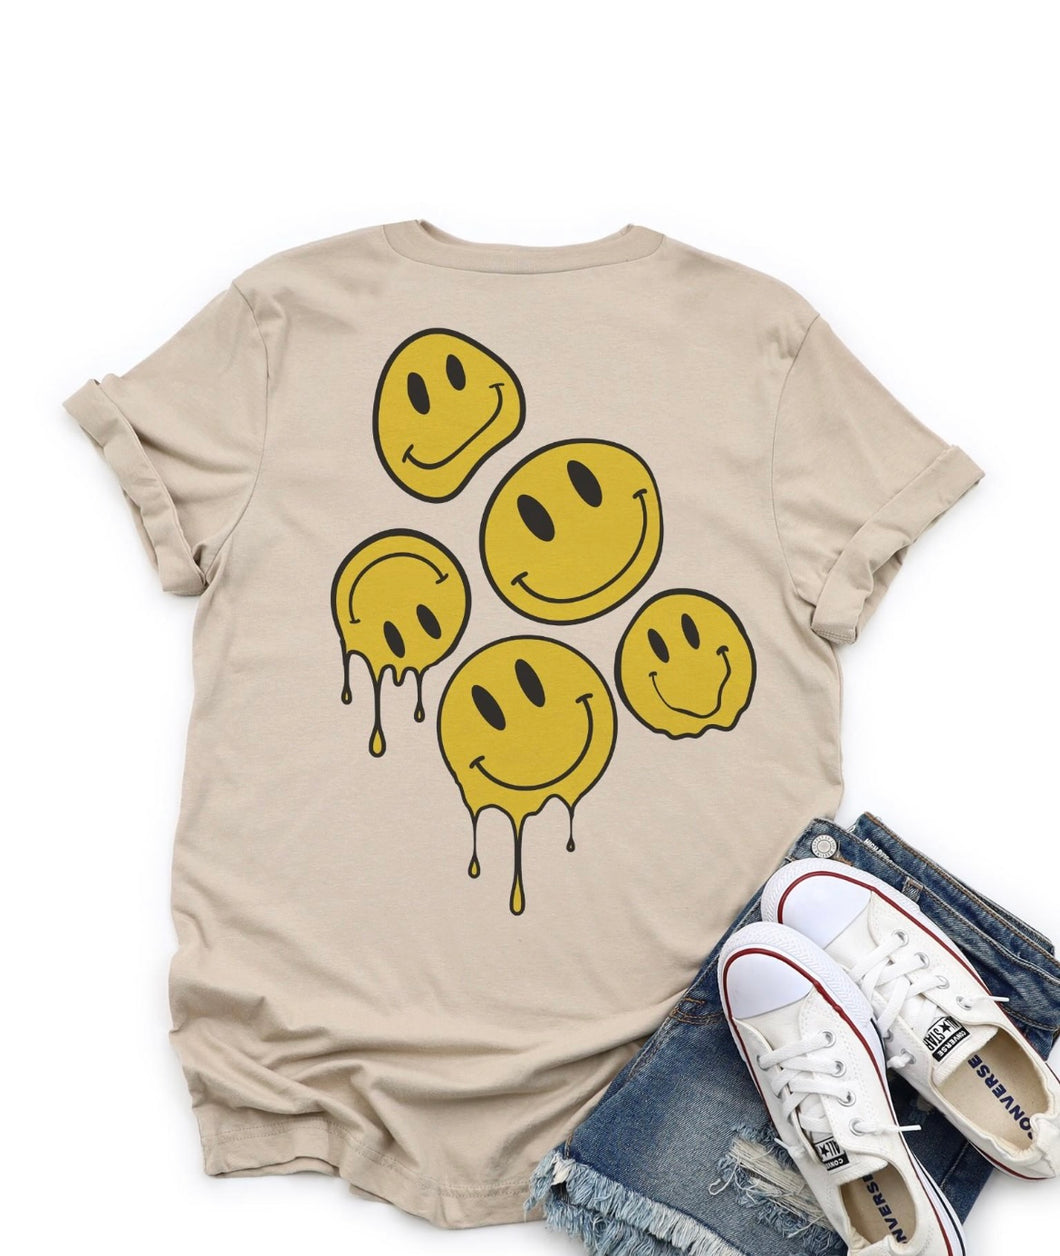 Drippy Smiley Face Tshirt